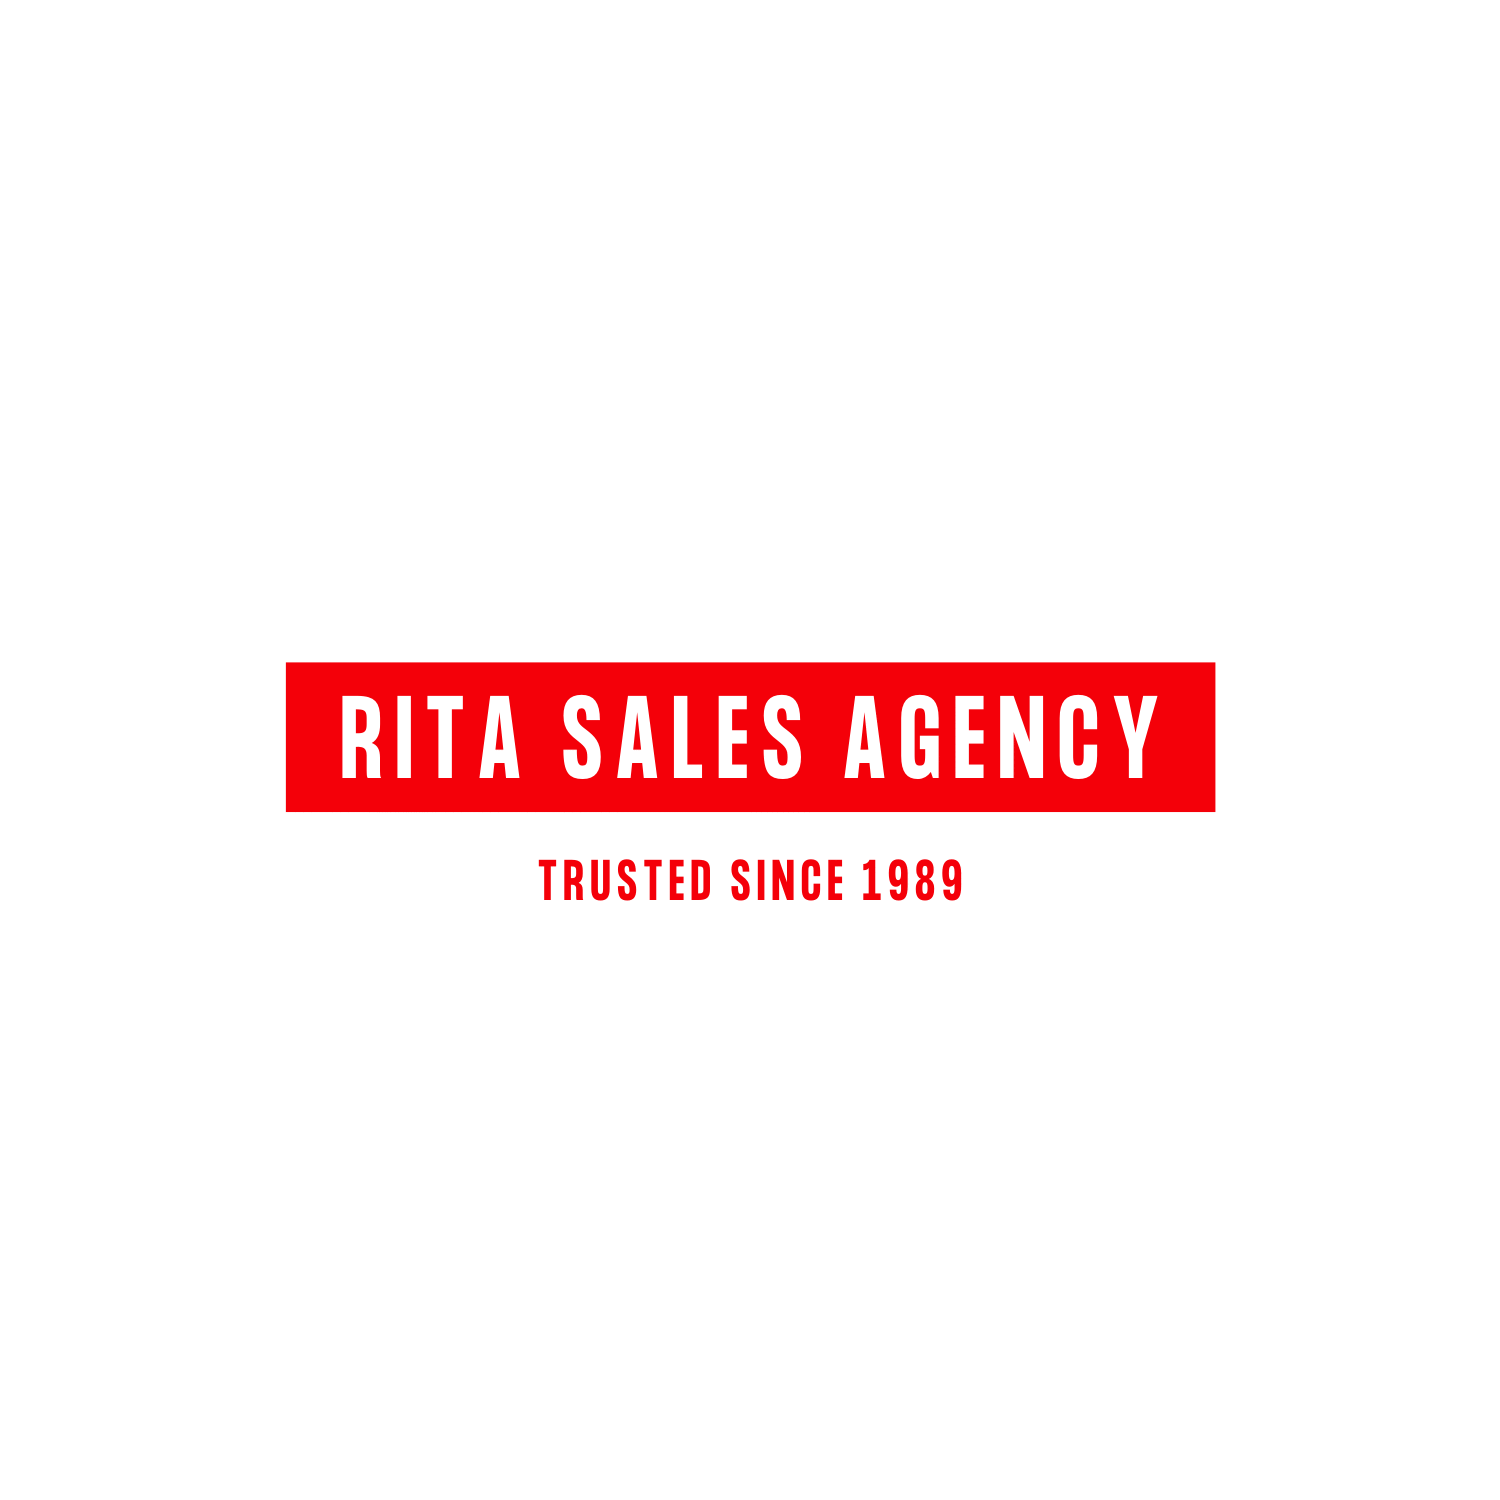 Rita Sales Agency